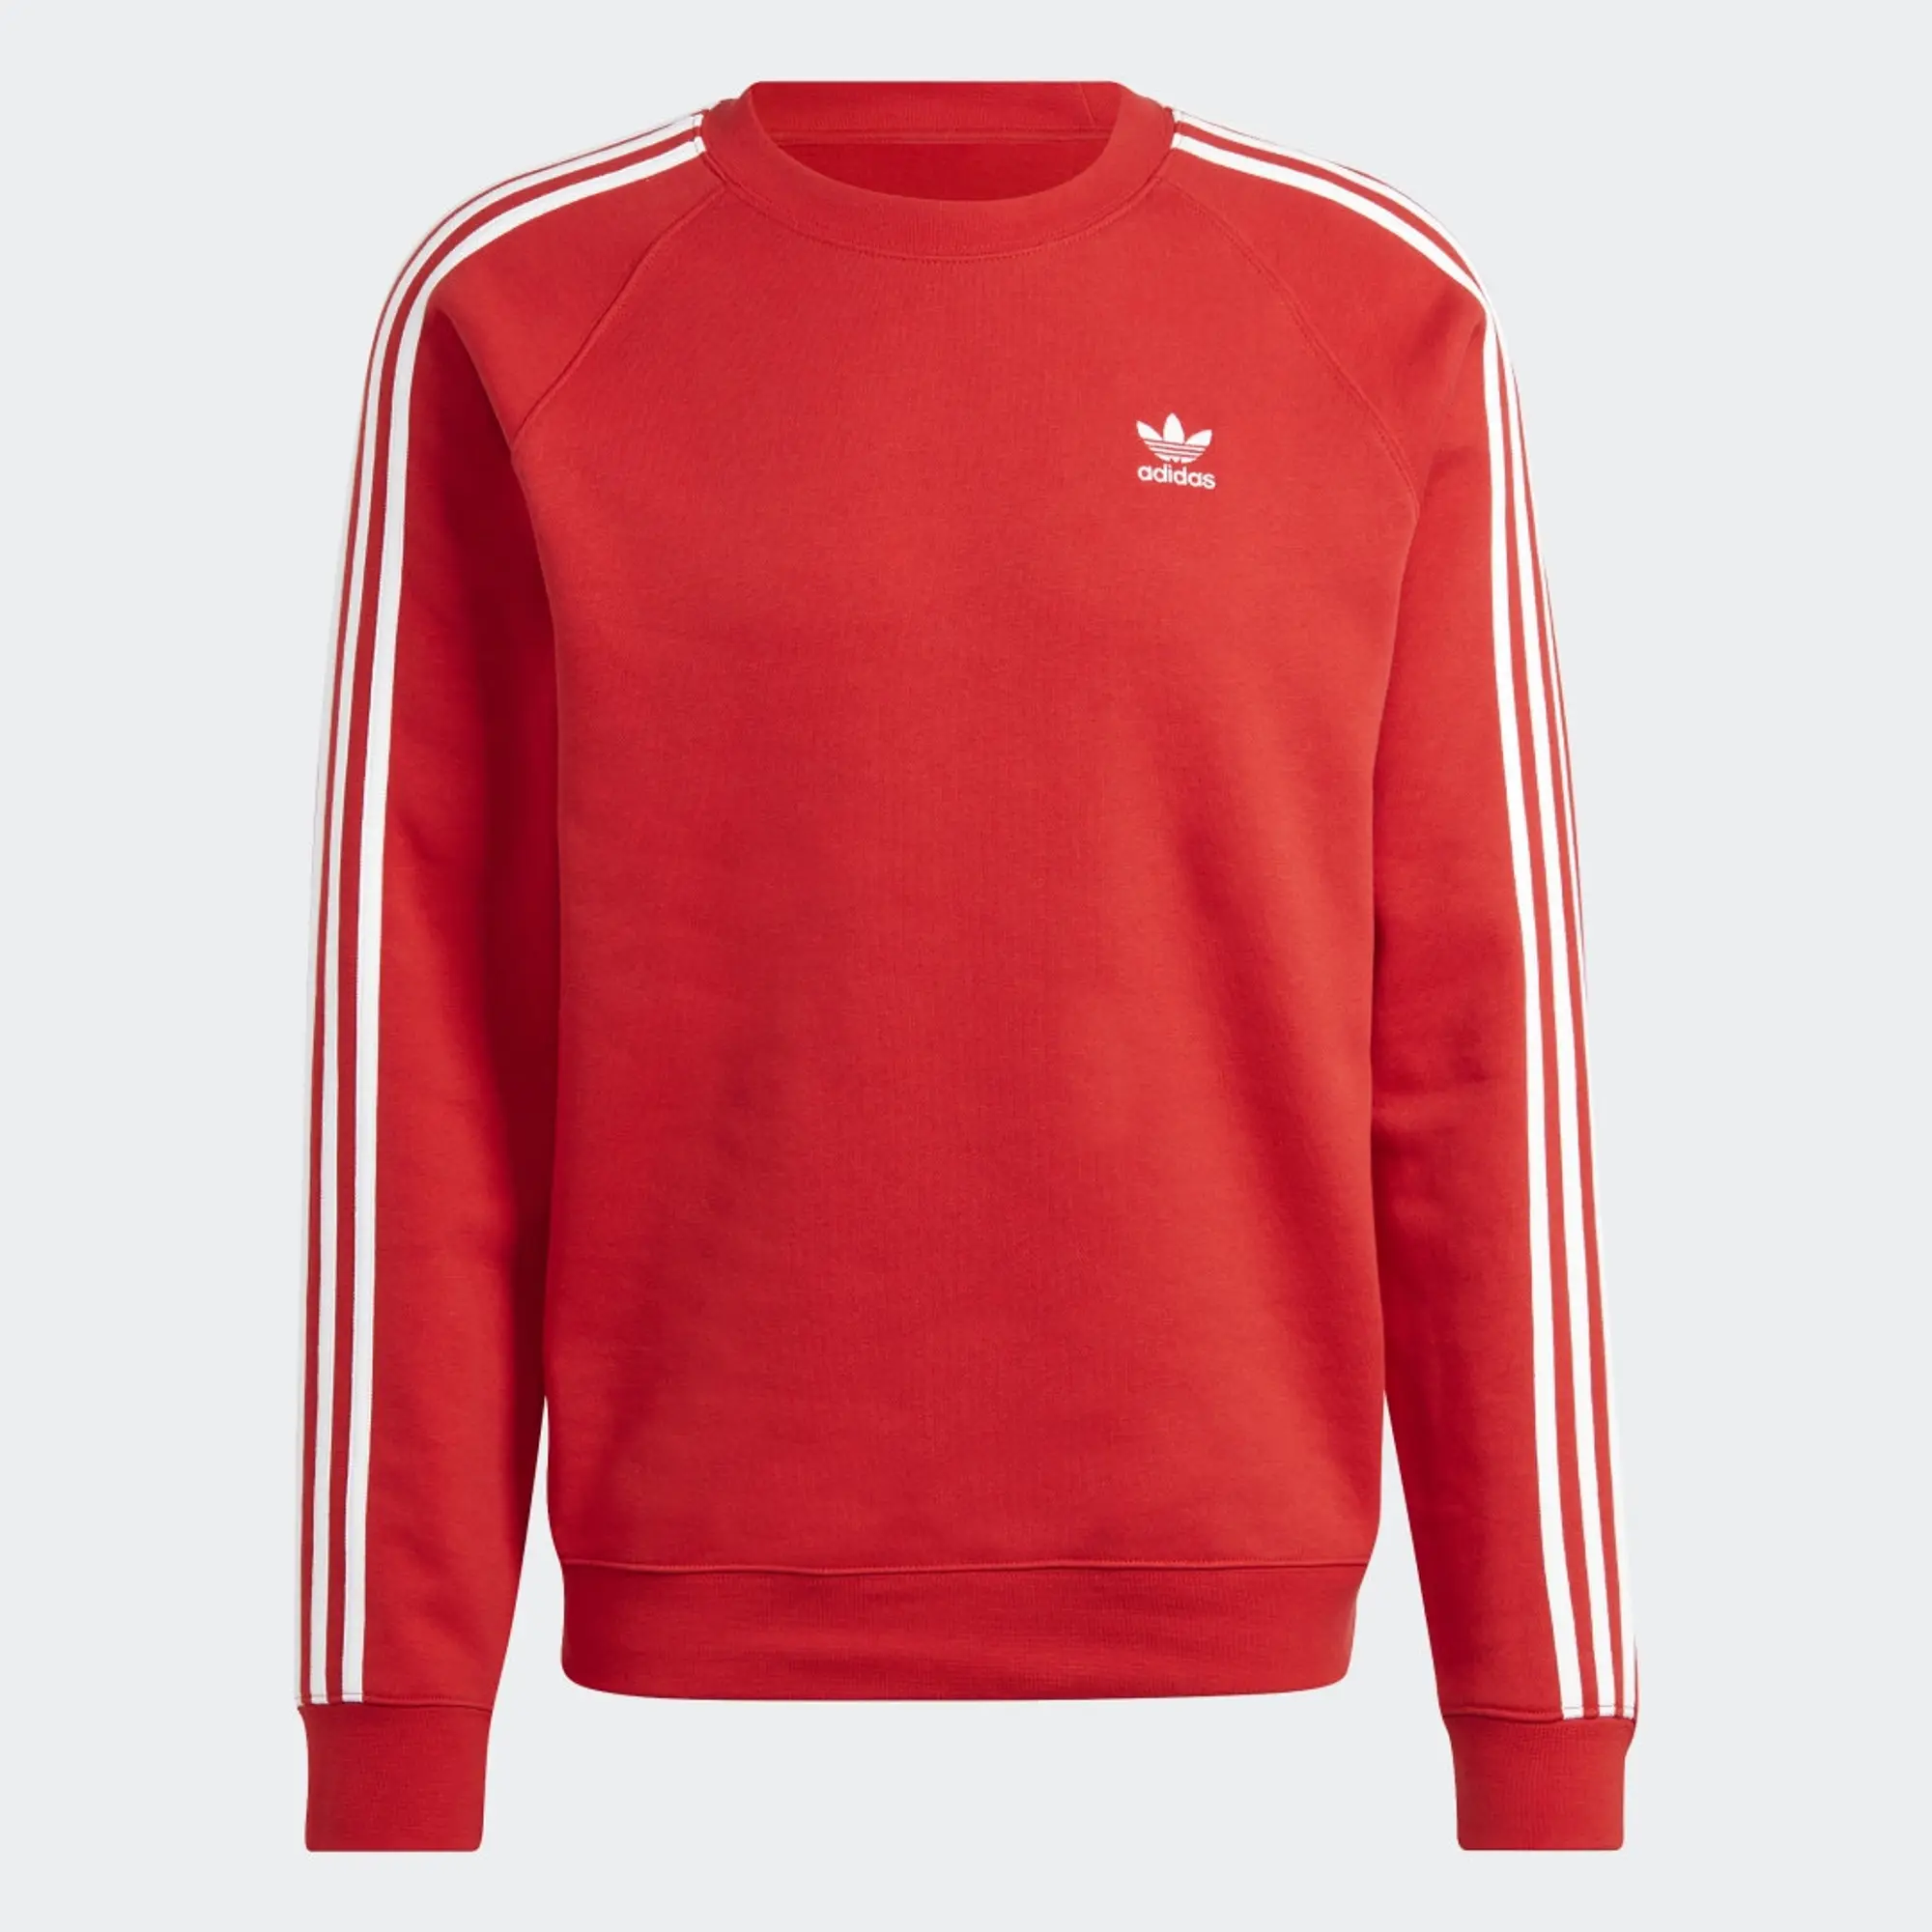 Adidas Originals 3-Stripes Crew Sweatshirt Better Scarlet